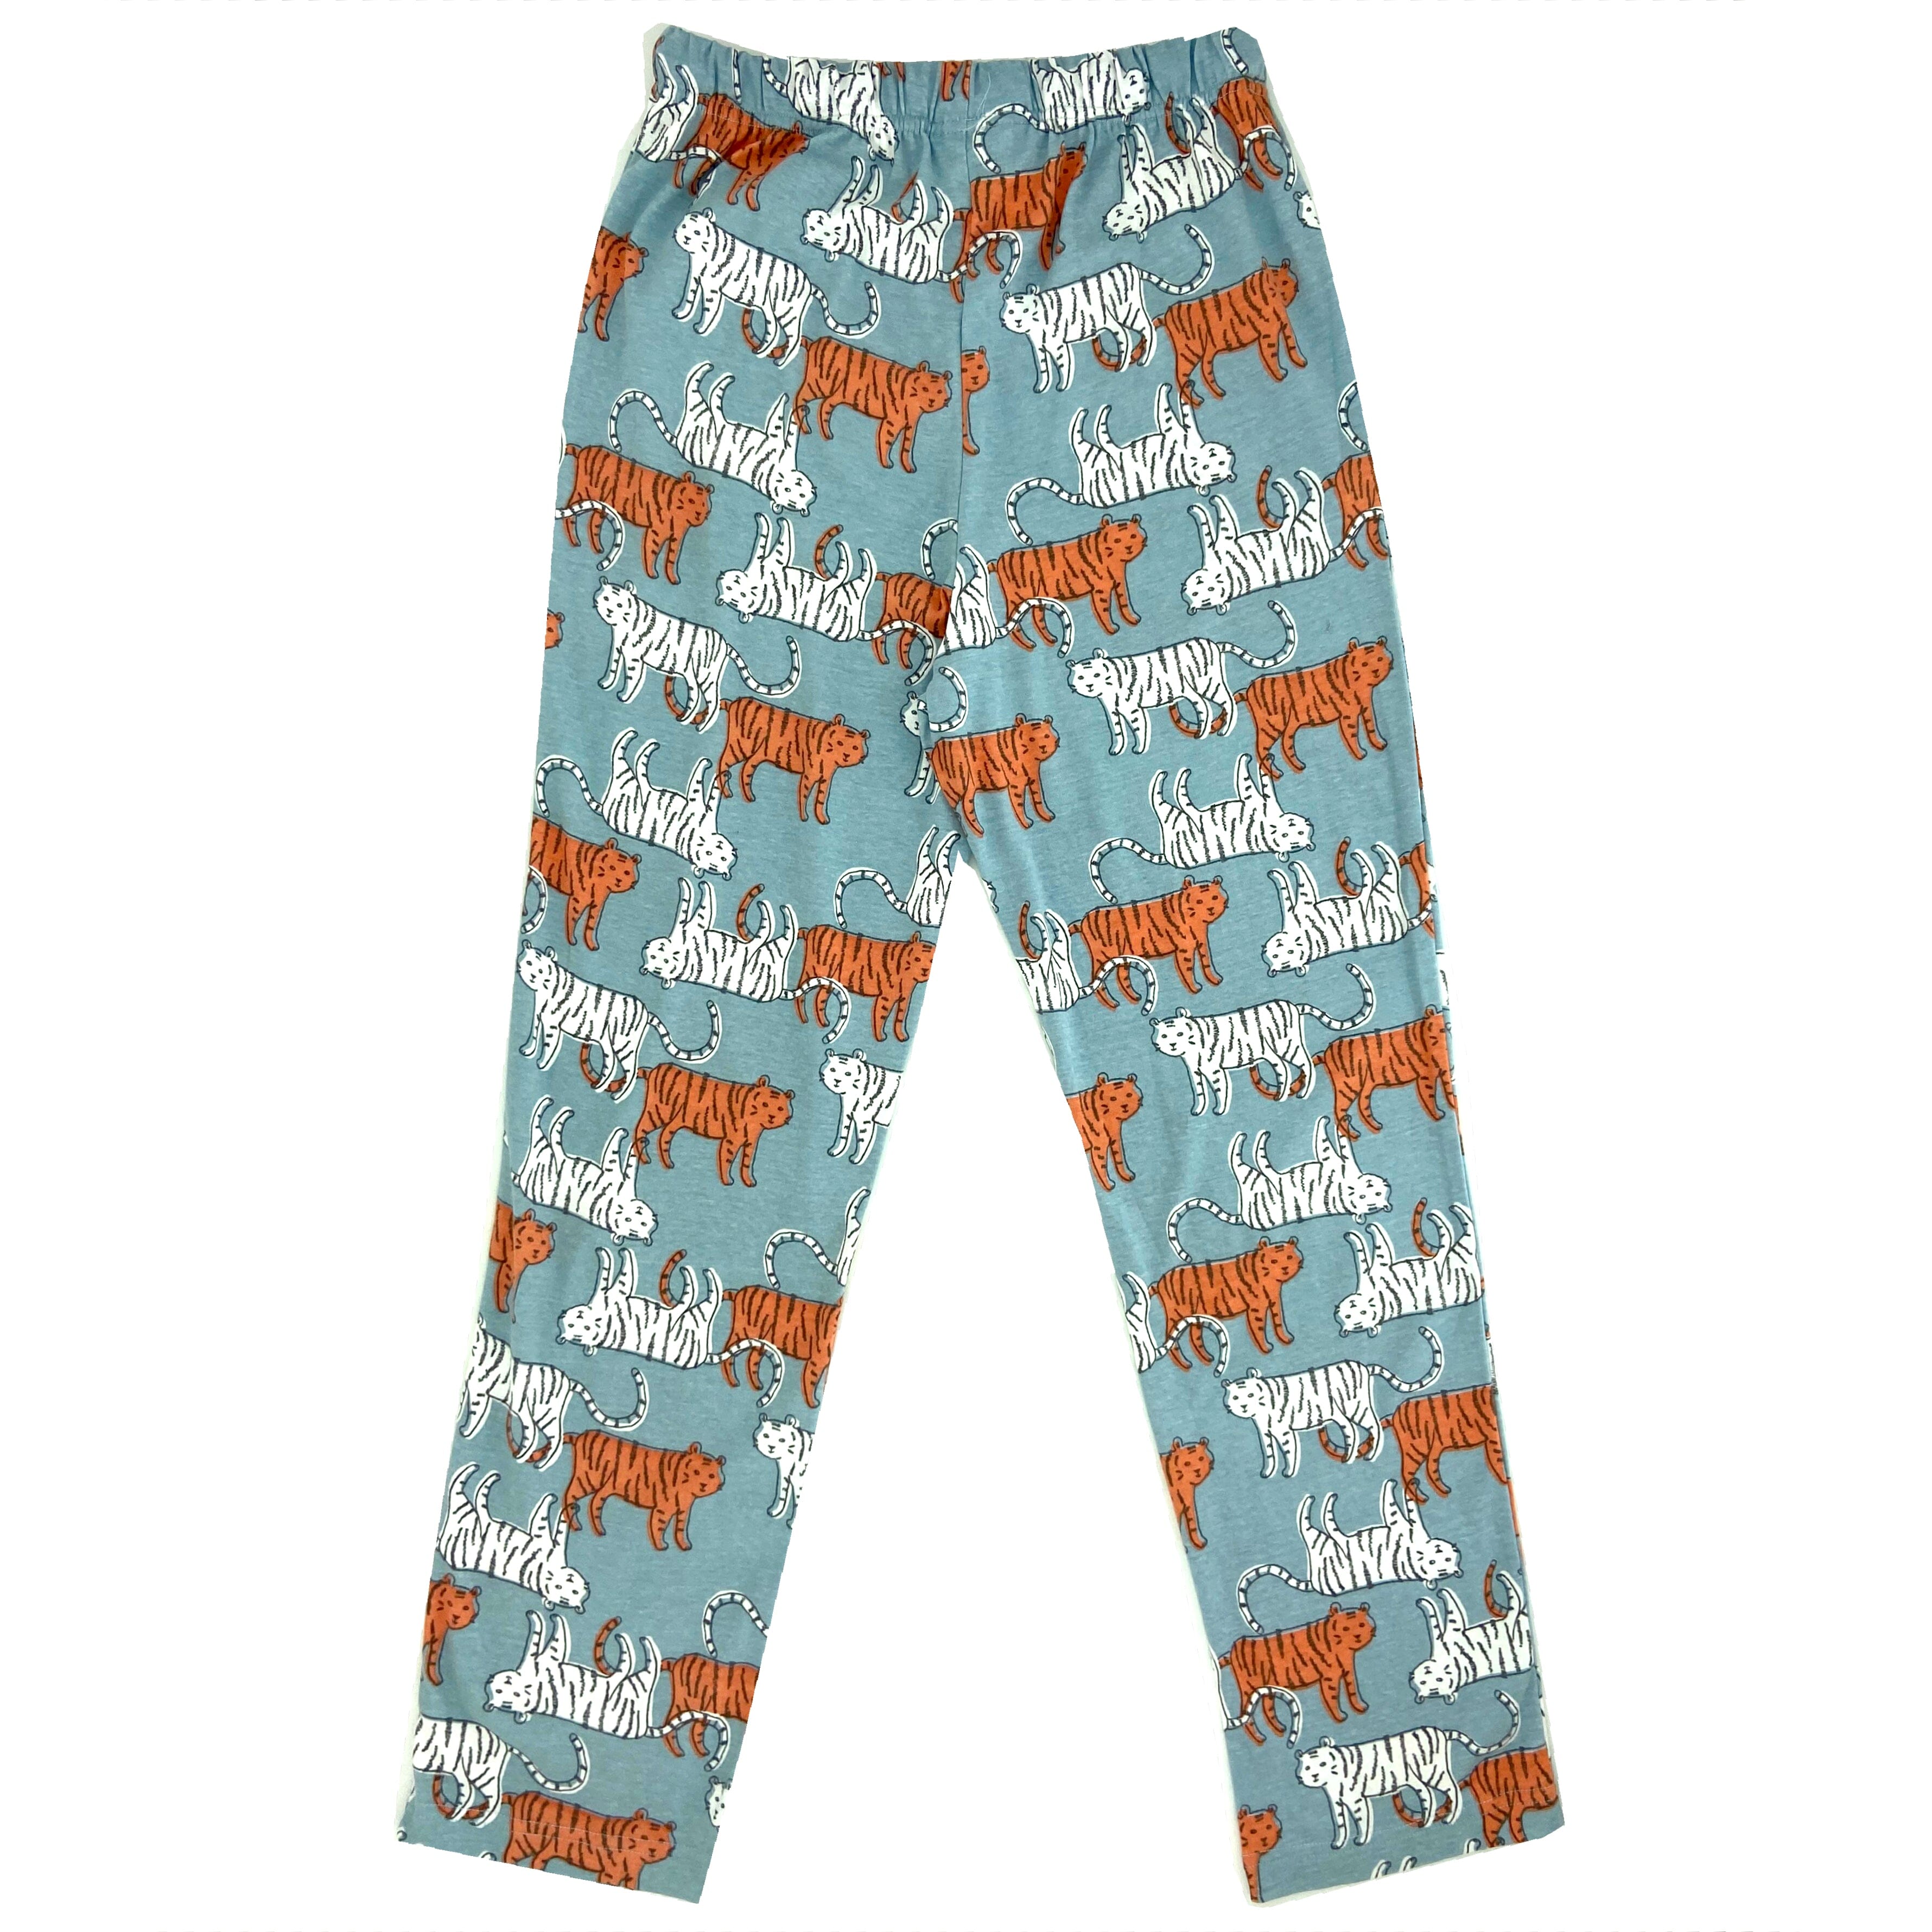 Cute Cartoon Tiger Print Pajama Pants. New Women's Tiger Lounge Pants